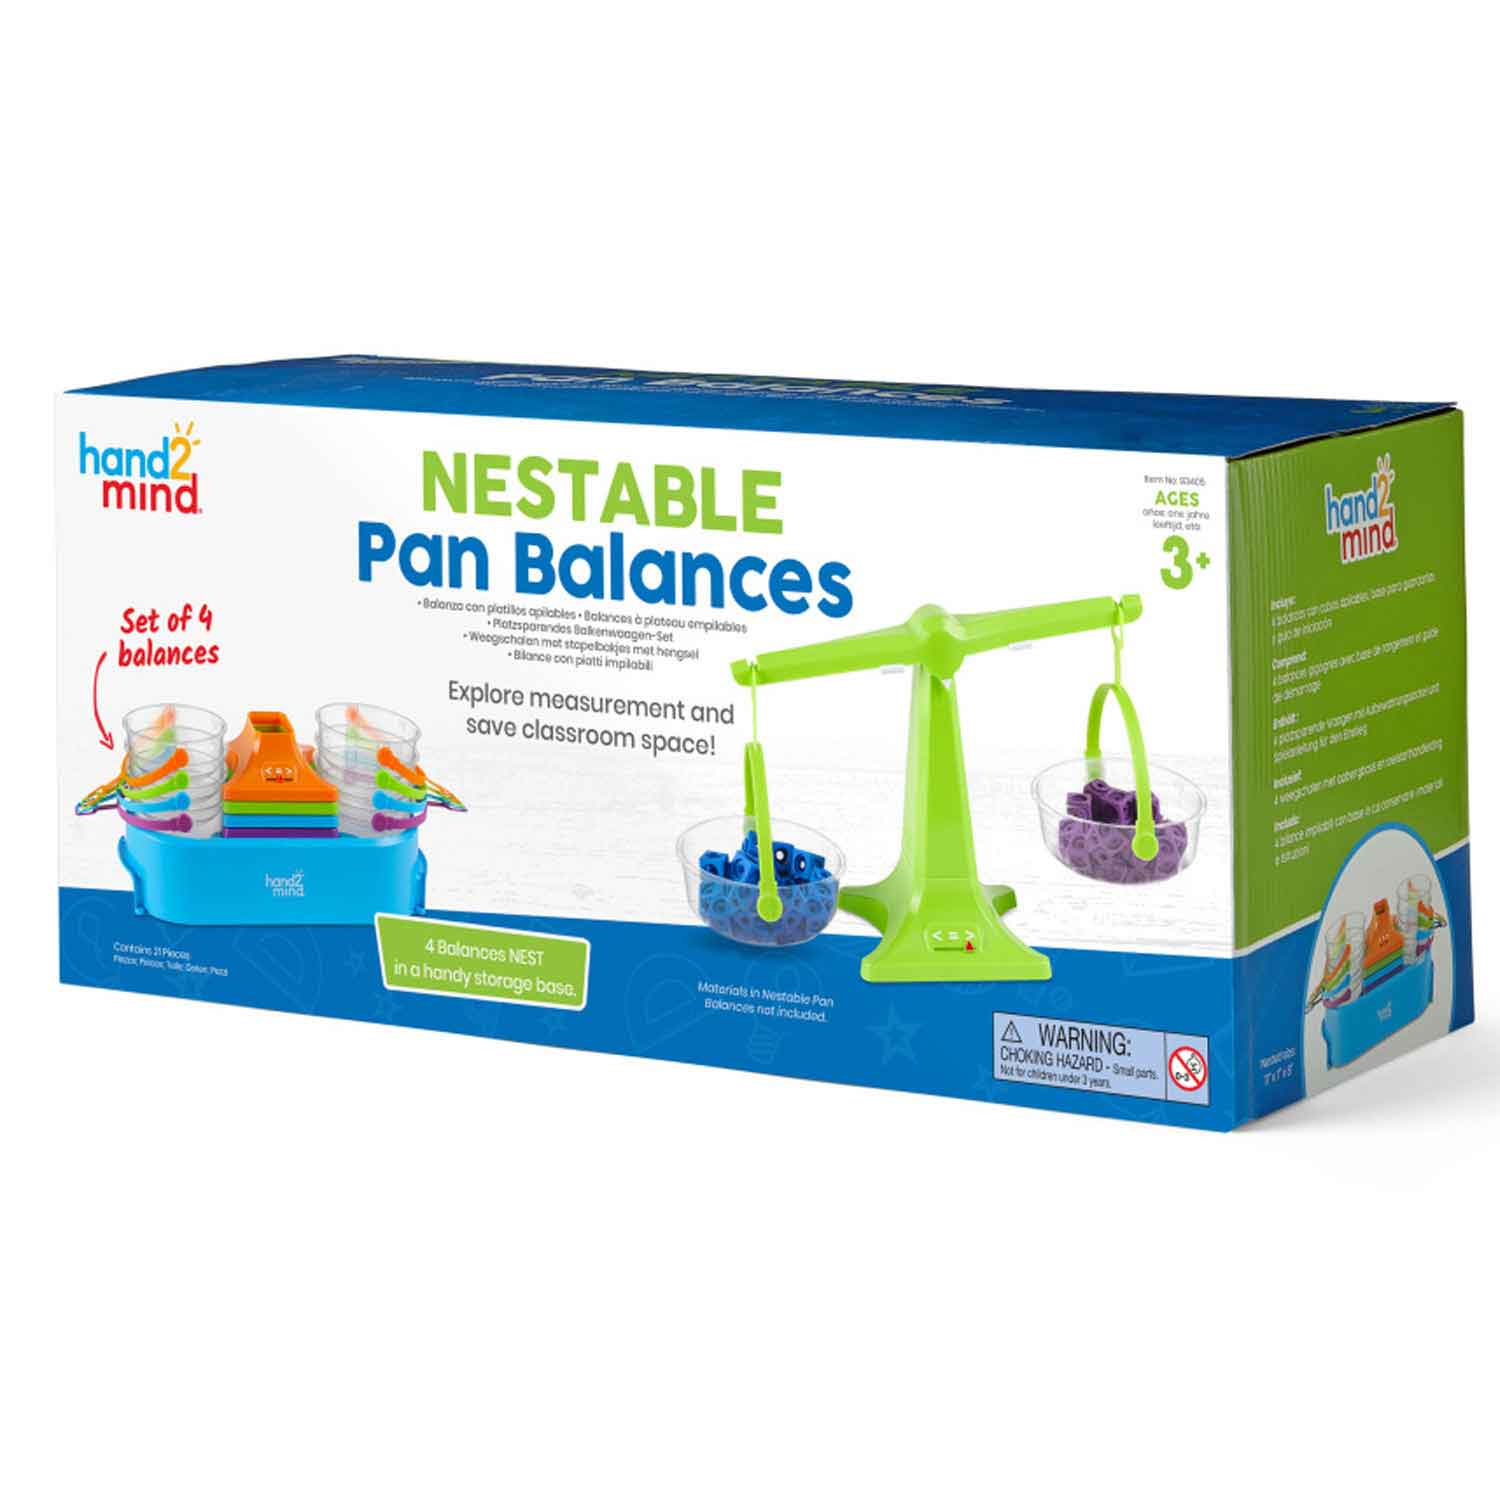 Nestable Pan Balance